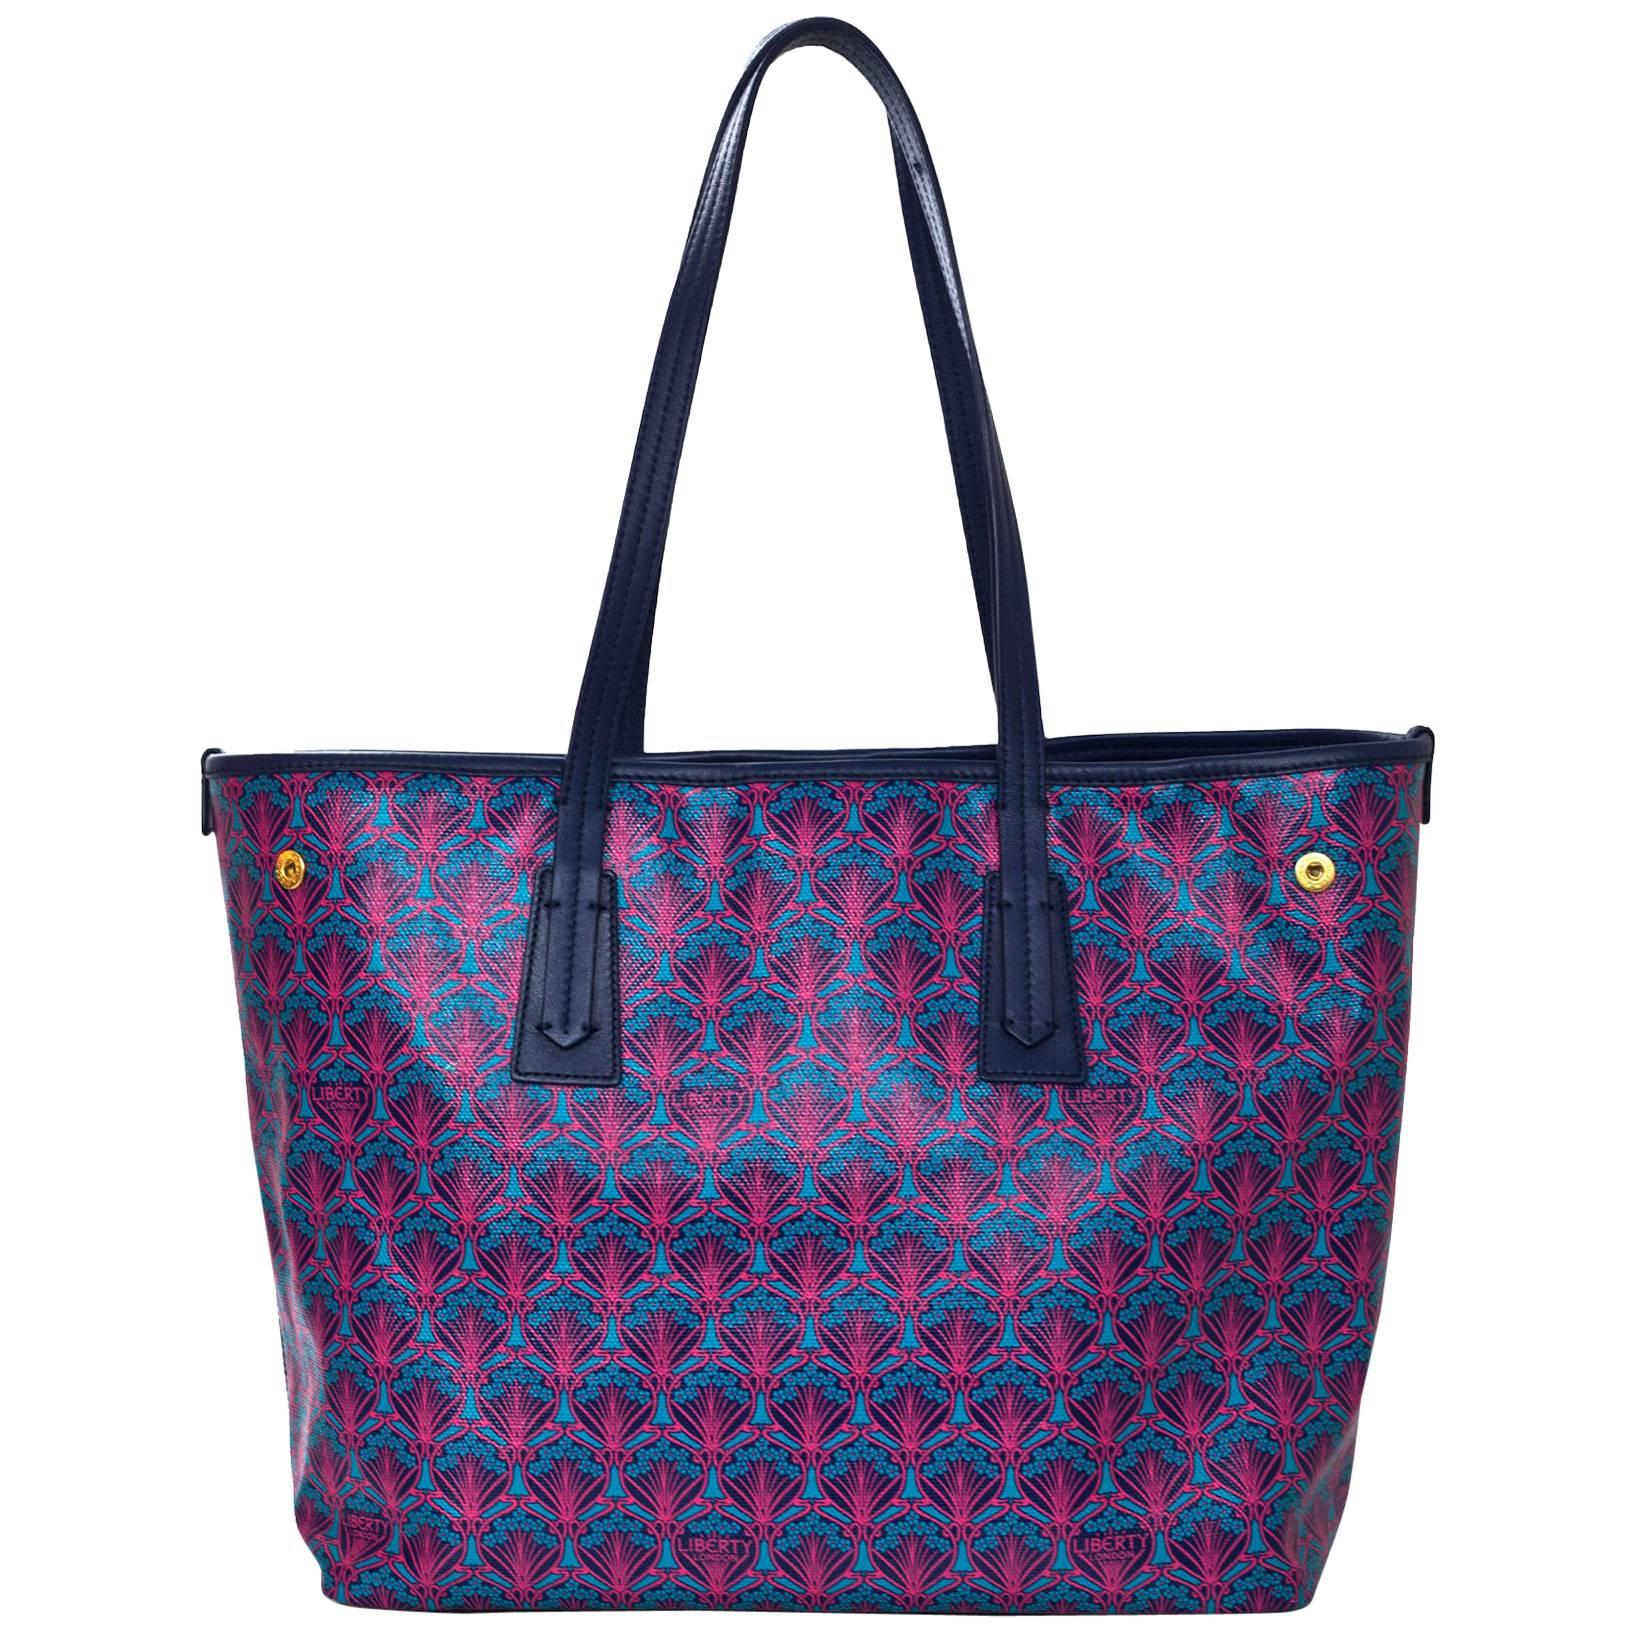 Liberty London Pink & Blue Marlborough Iphis-Print Tote Bag with Dust Bag